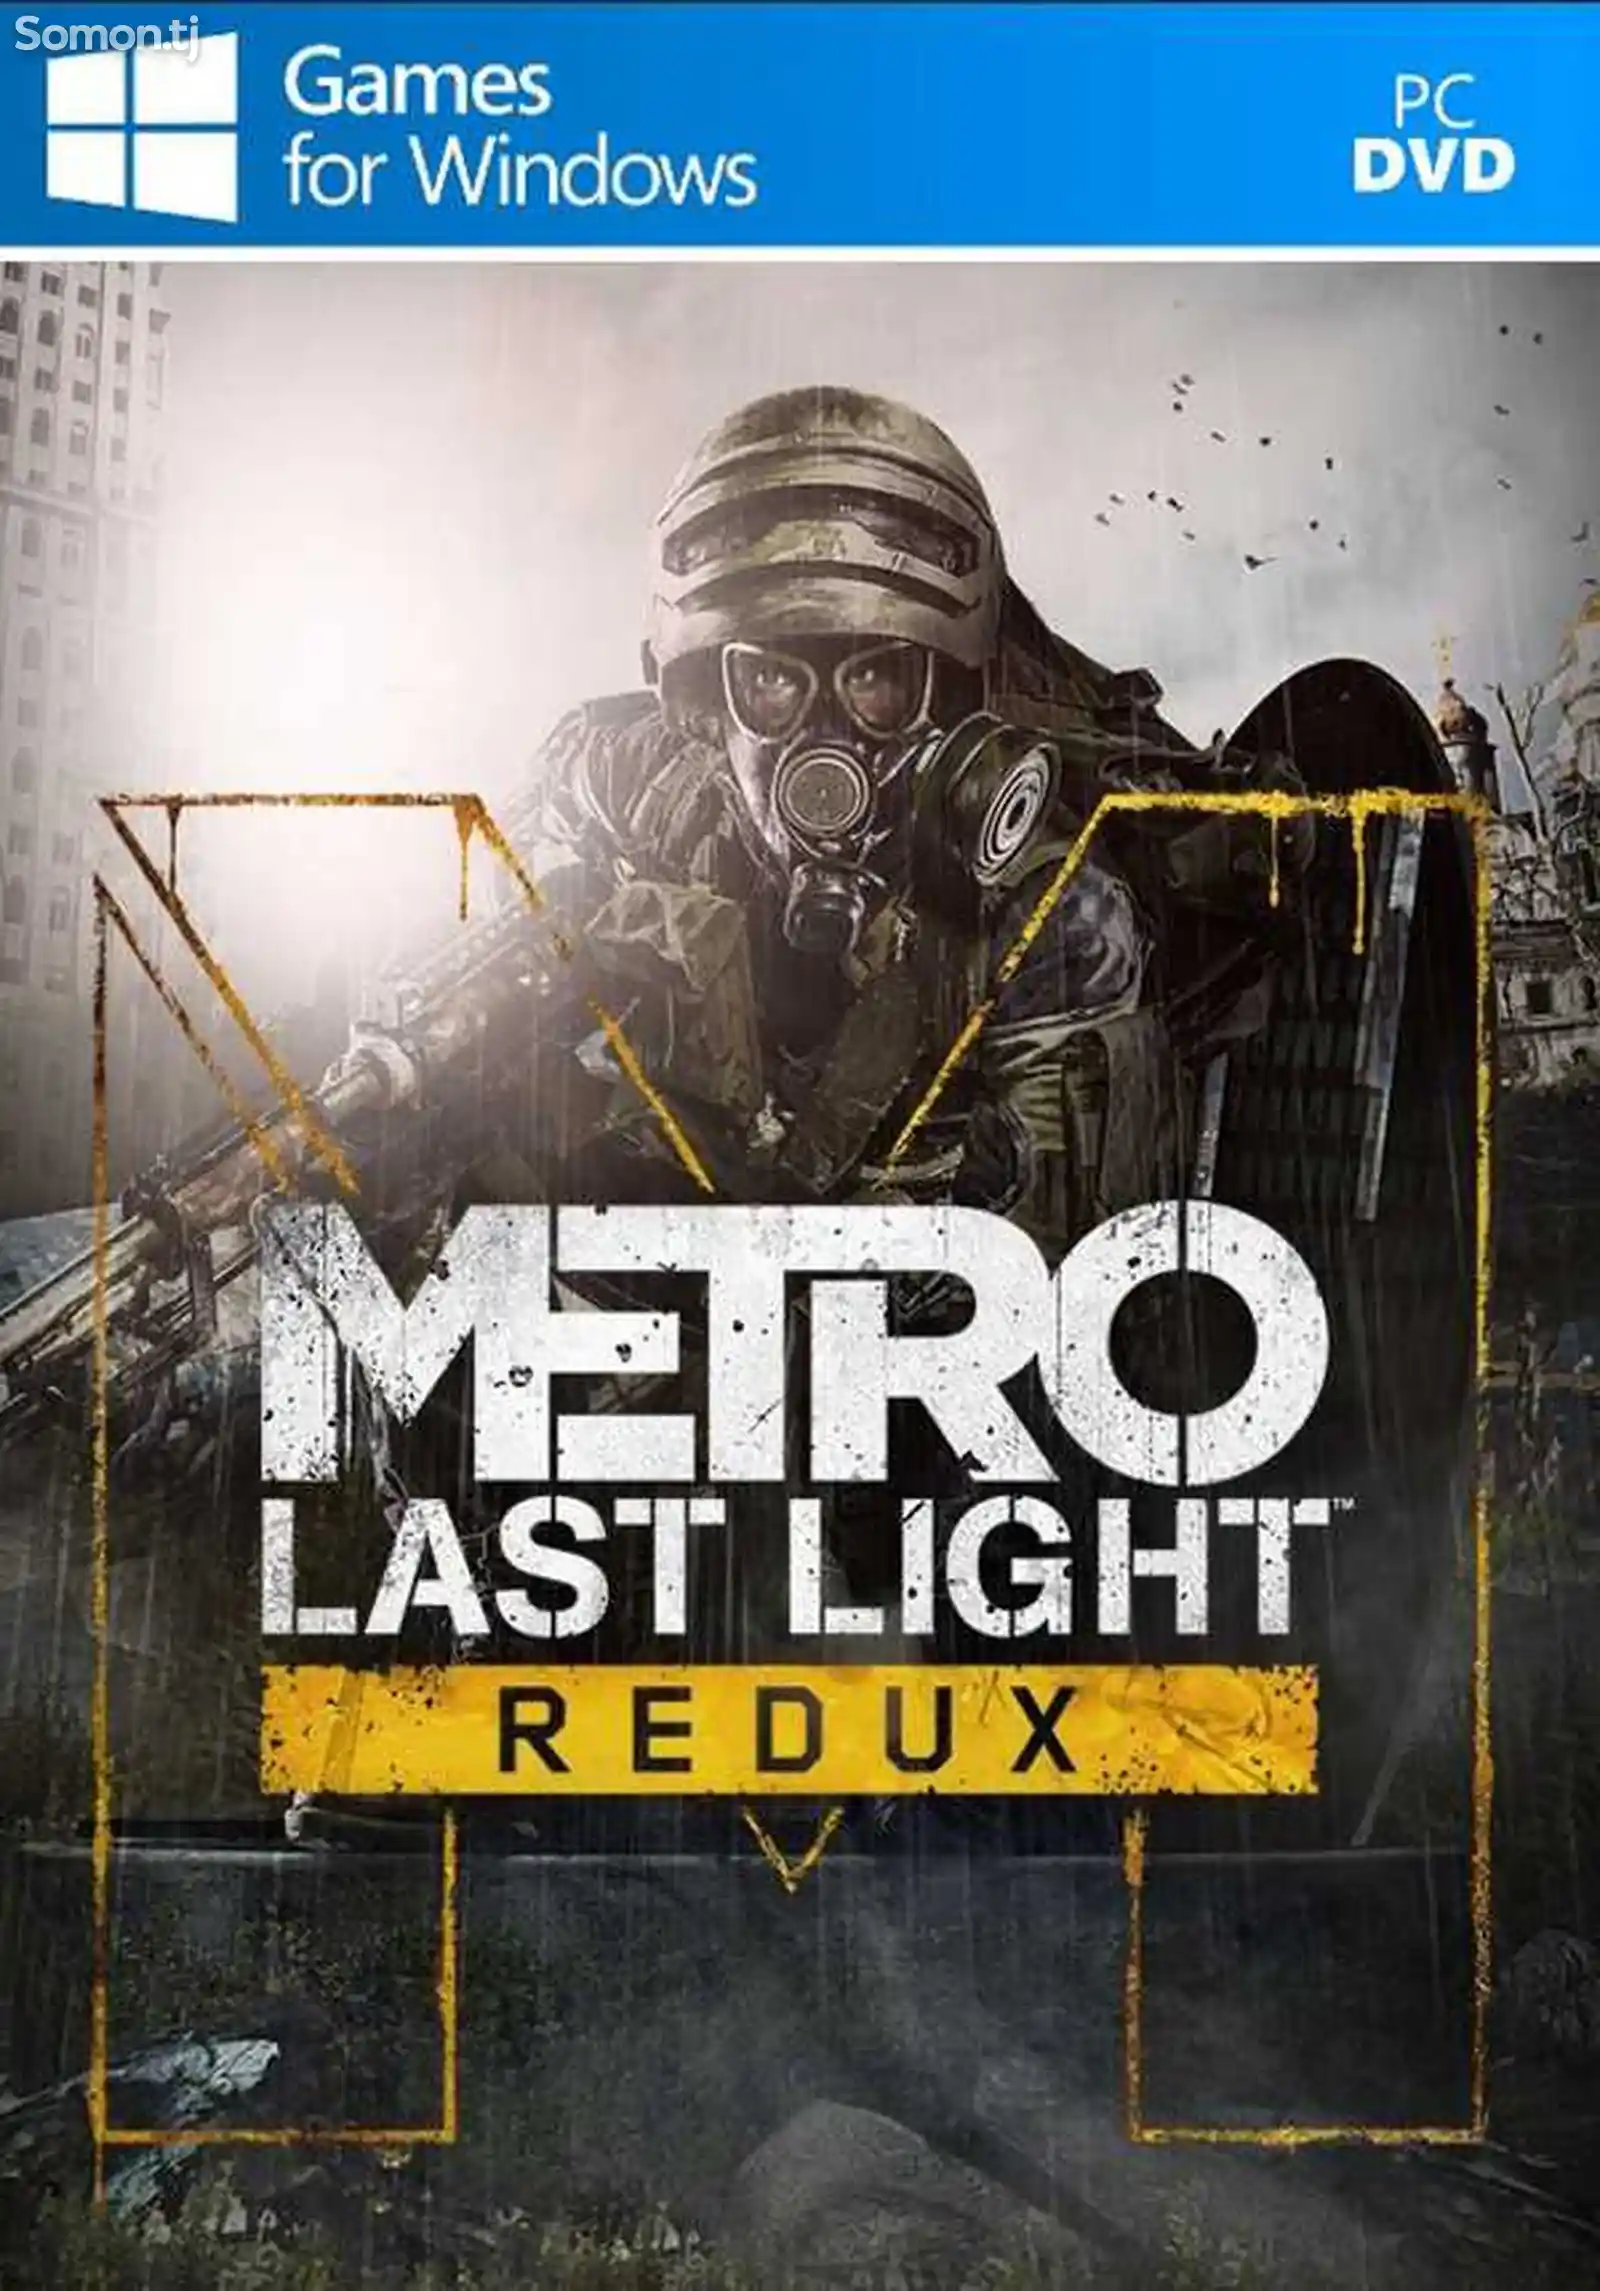 Игра Metro last light redux для компьютера-пк-pc-1